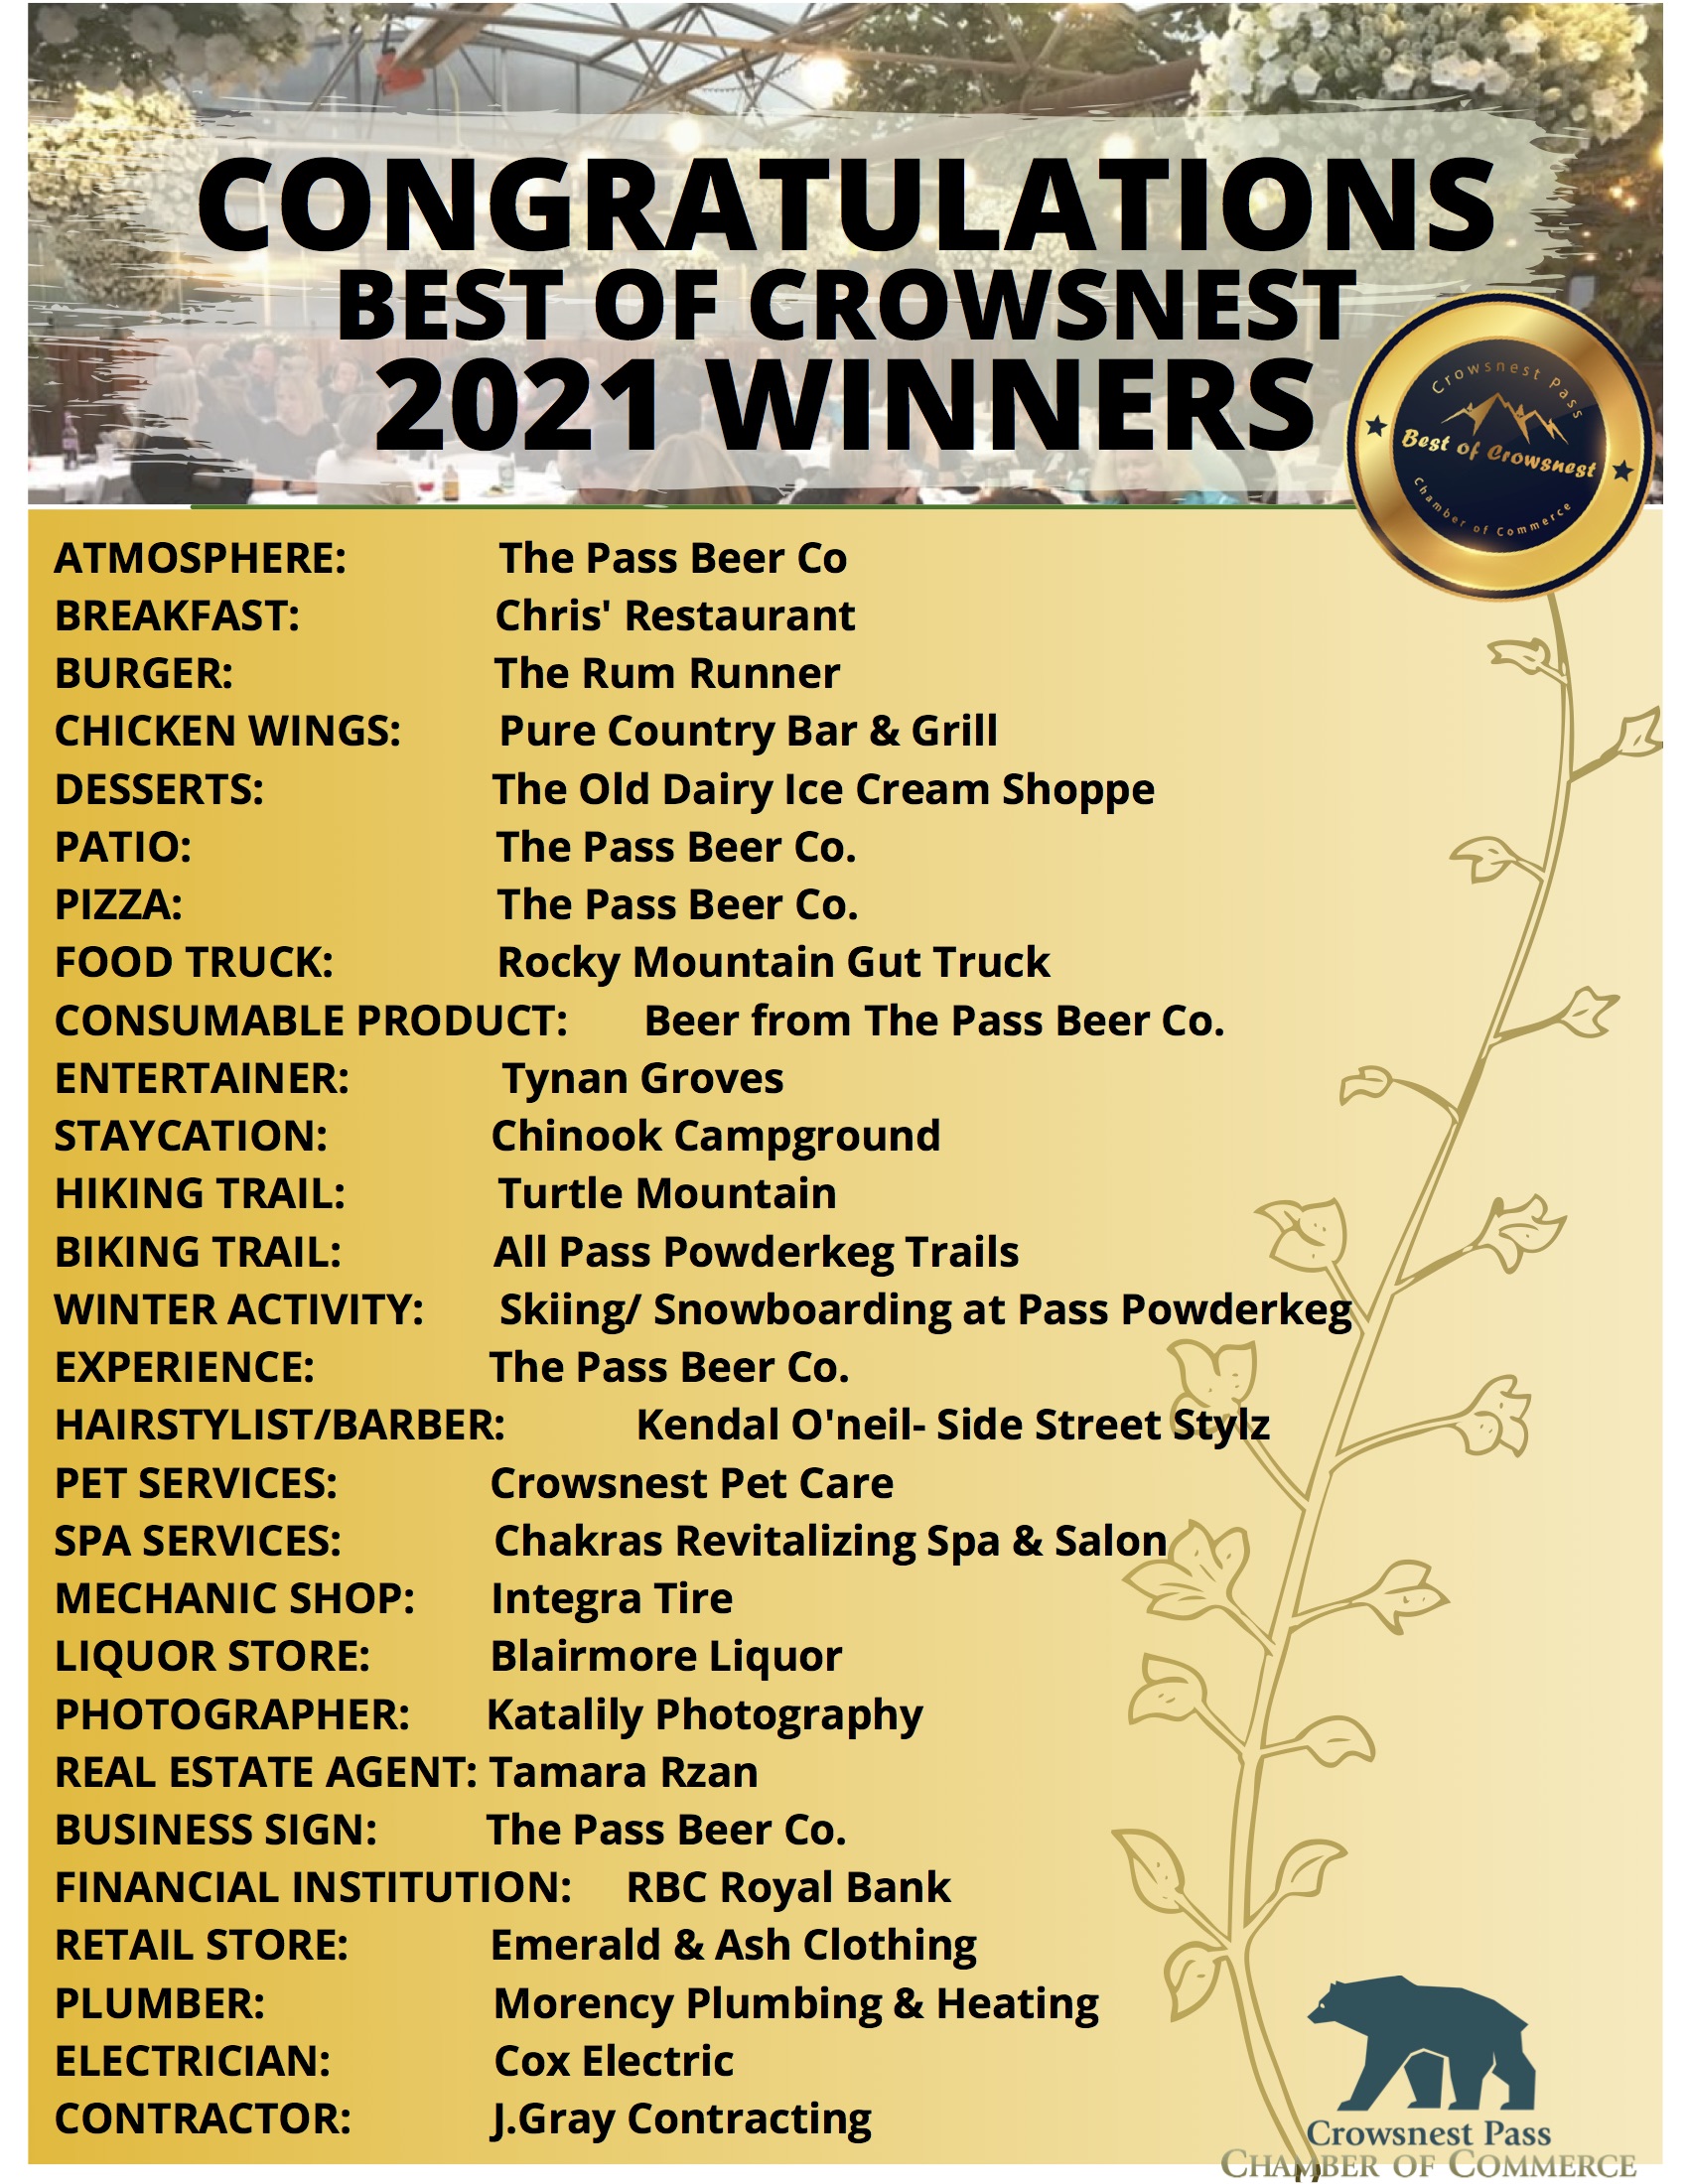 Best of Crowsnest Awards